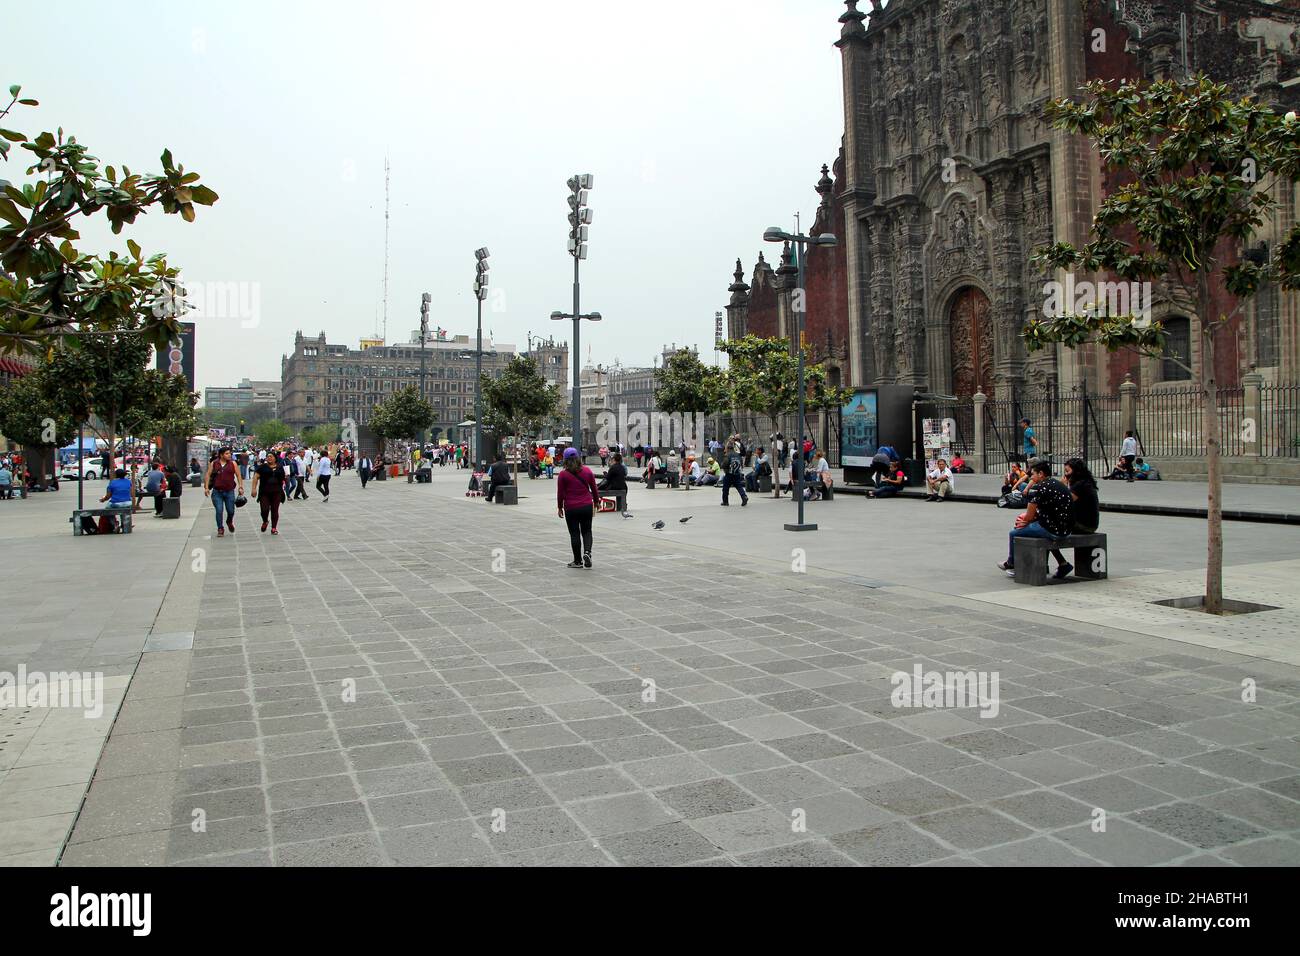 Manuel Gamio square in Mexico city near Templo Mayor. Plaza Manuel Gamio. Stock Photo